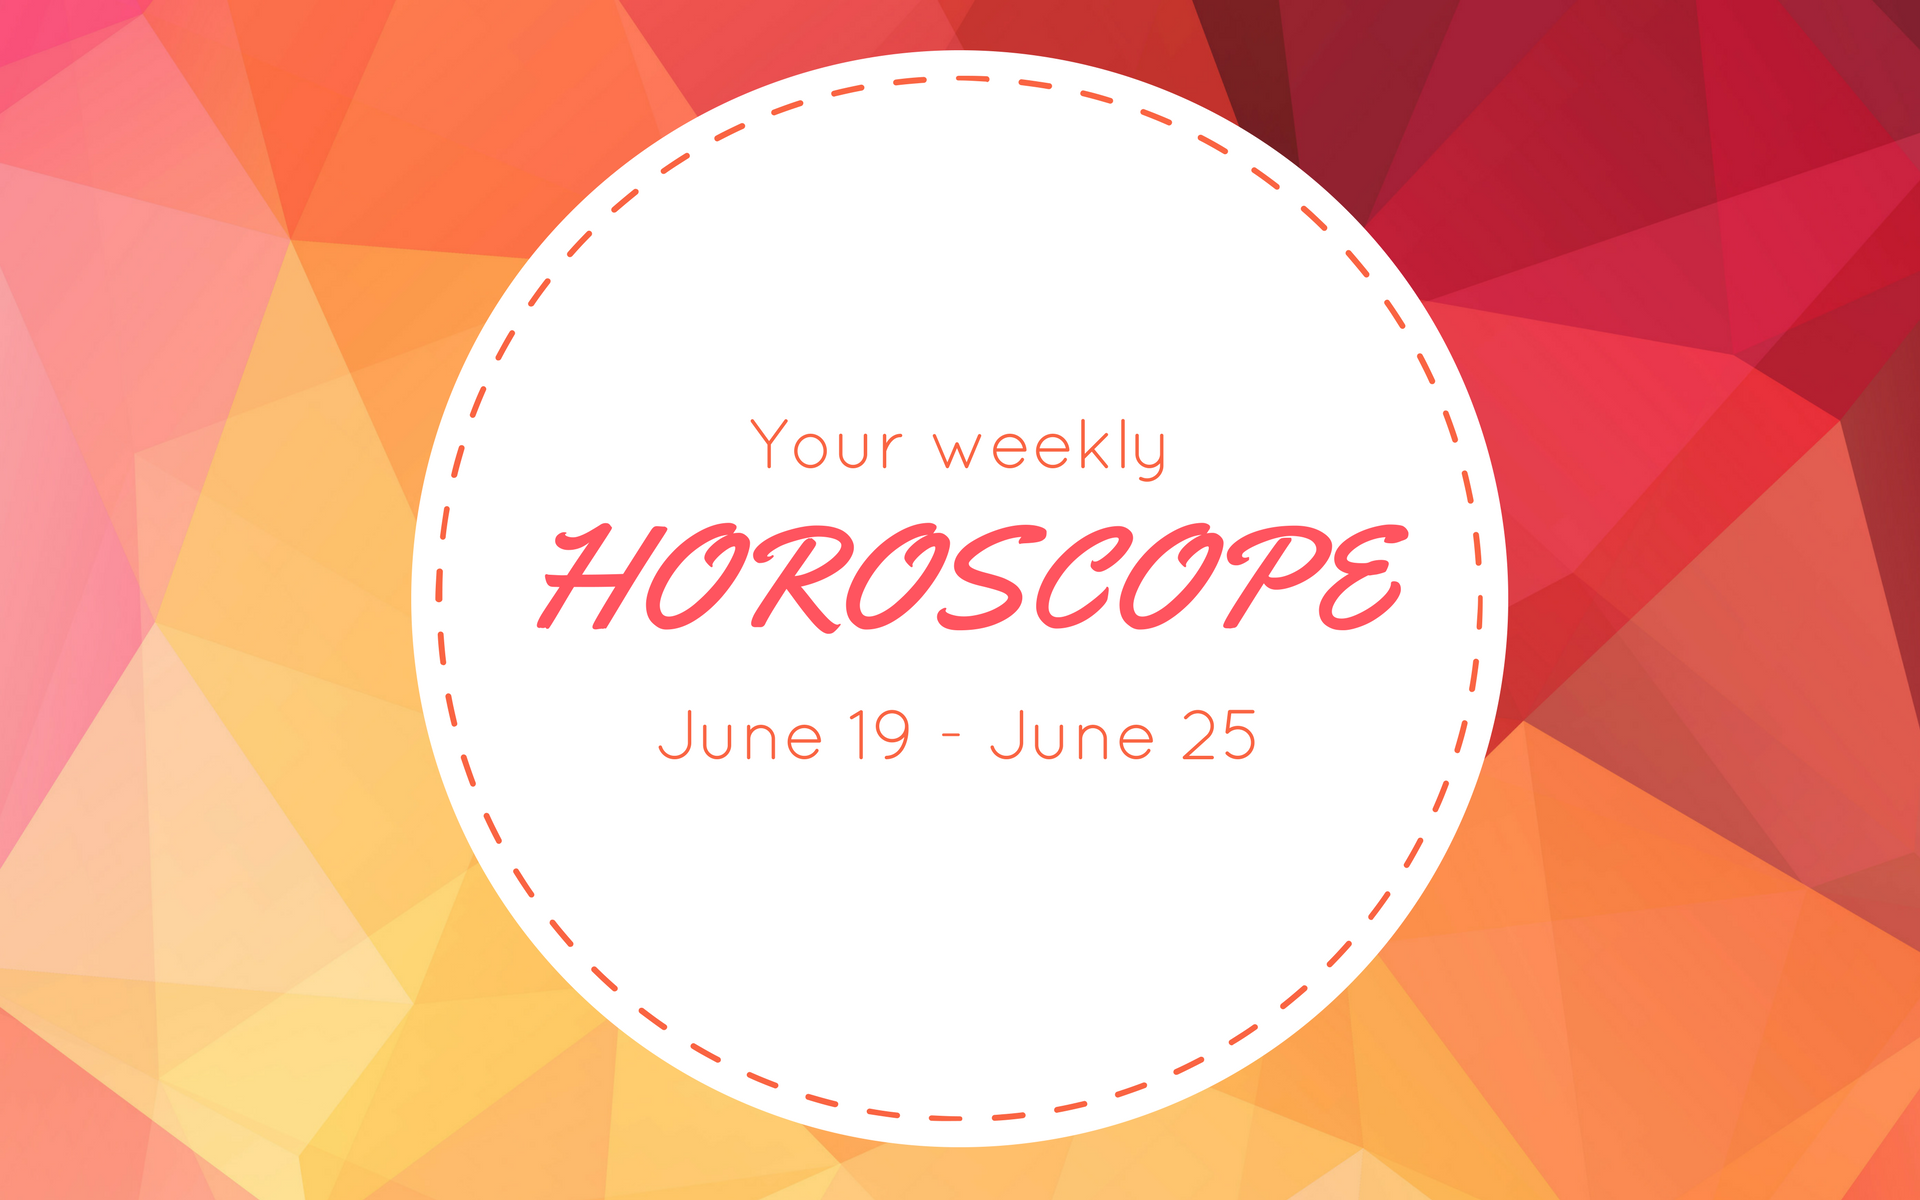 Your Weekly Horoscope: June 19 - June 25